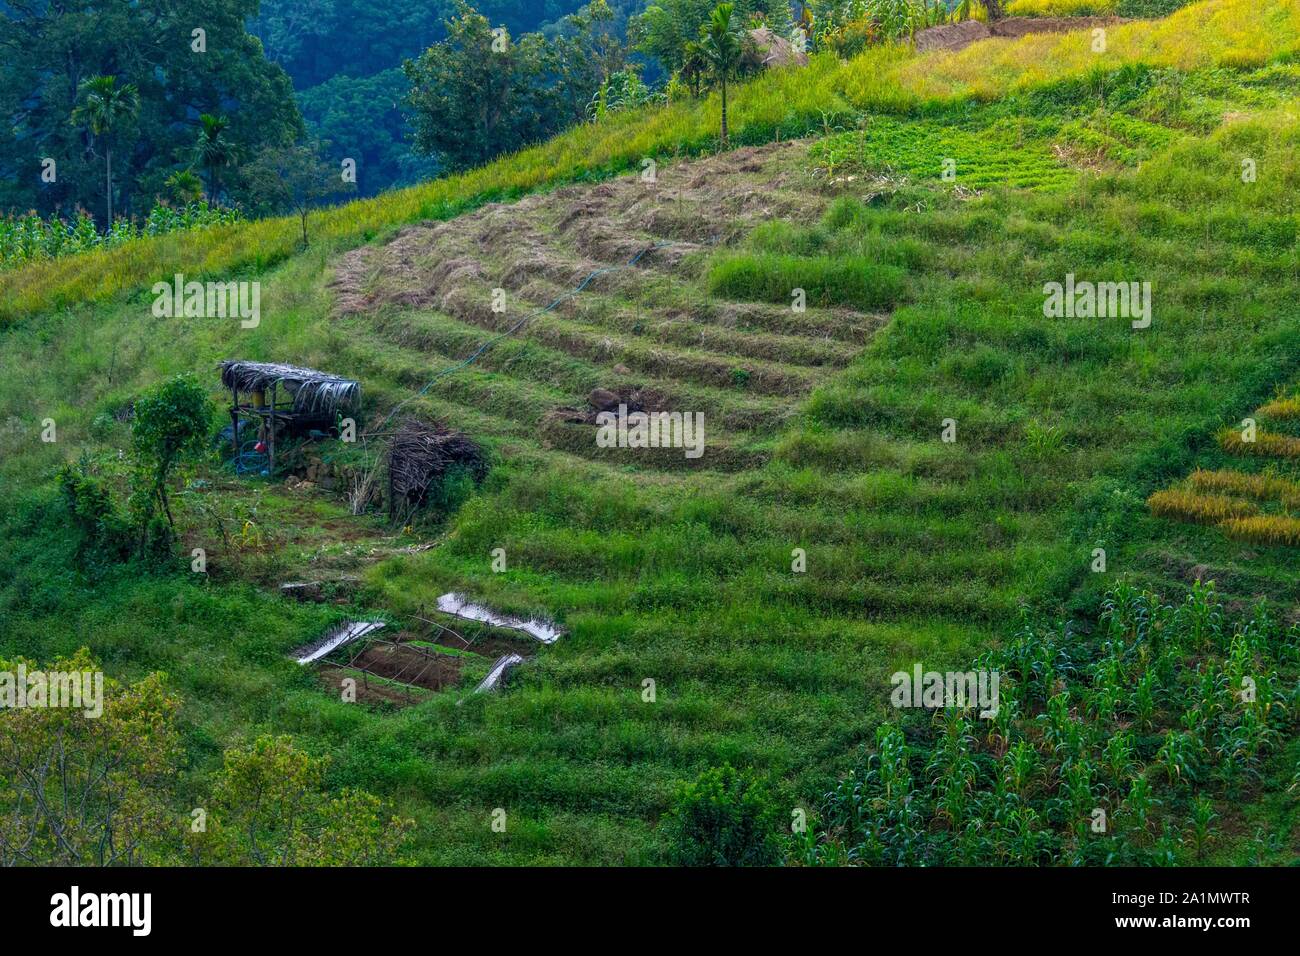 Morning view of paddy field in Sri Lanka Stock Photo